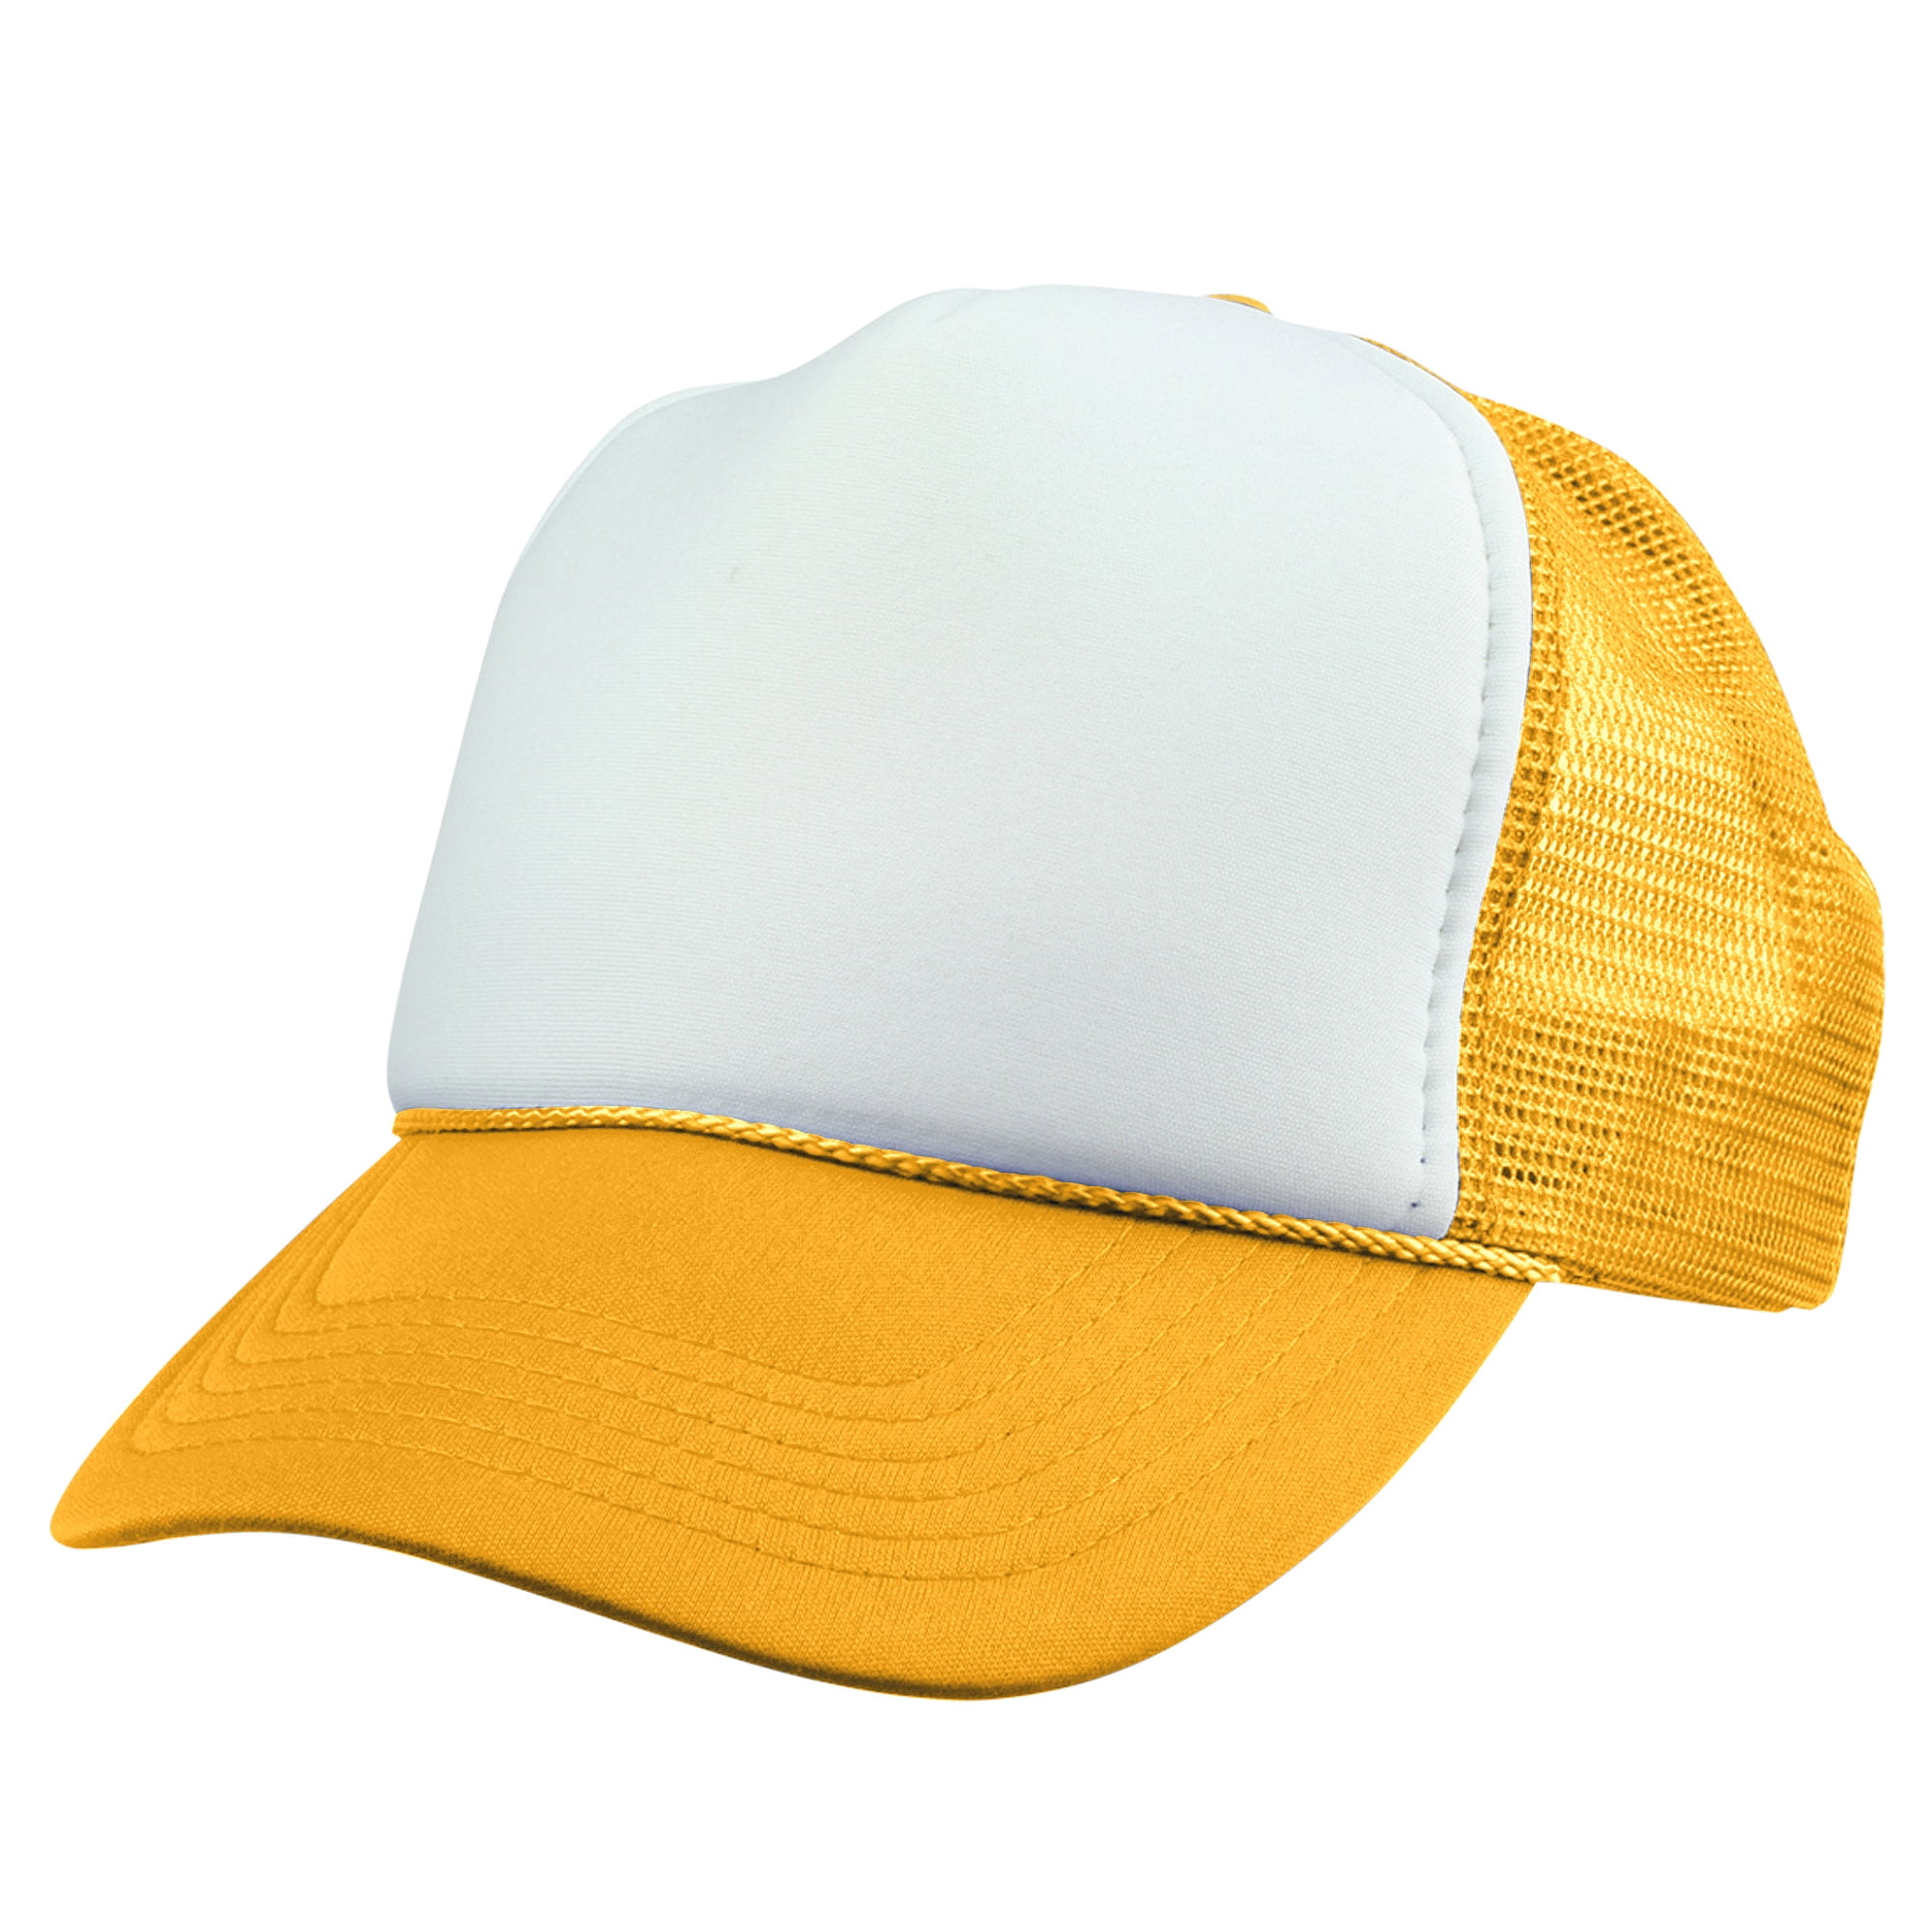 DALIX - DALIX Youth Mesh Trucker Cap Adjustable Hat in Yellow White ...